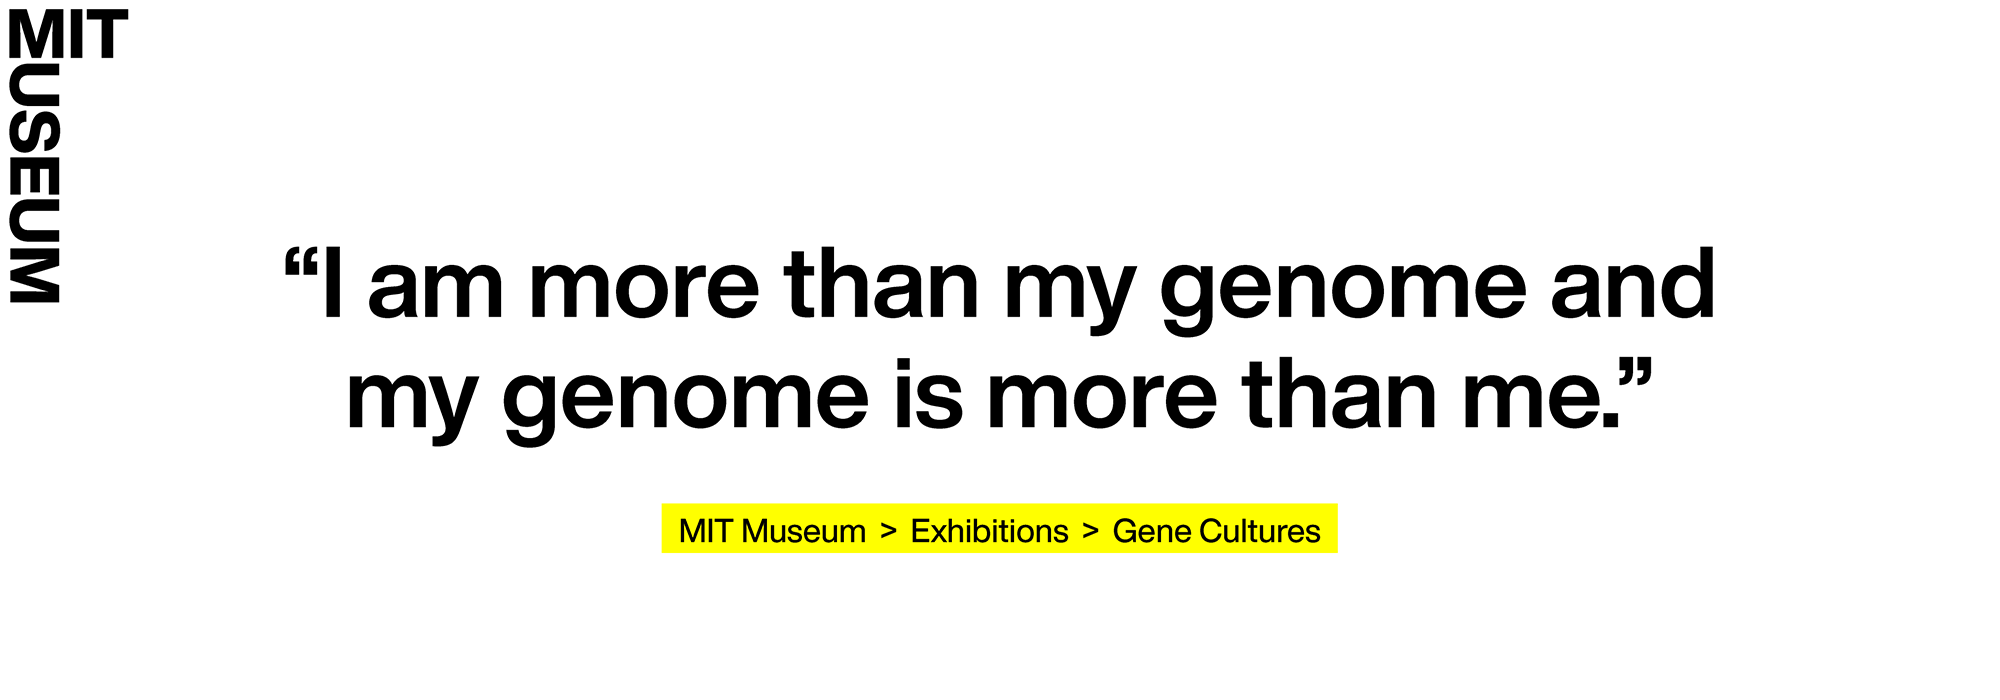 MIT MUSEUM GENE CULTURES EXHIBIT  Martin Krzywinski / science + art / Canada's Michael Smith Genome Sciences Center / https://mkweb.bcgsc.ca